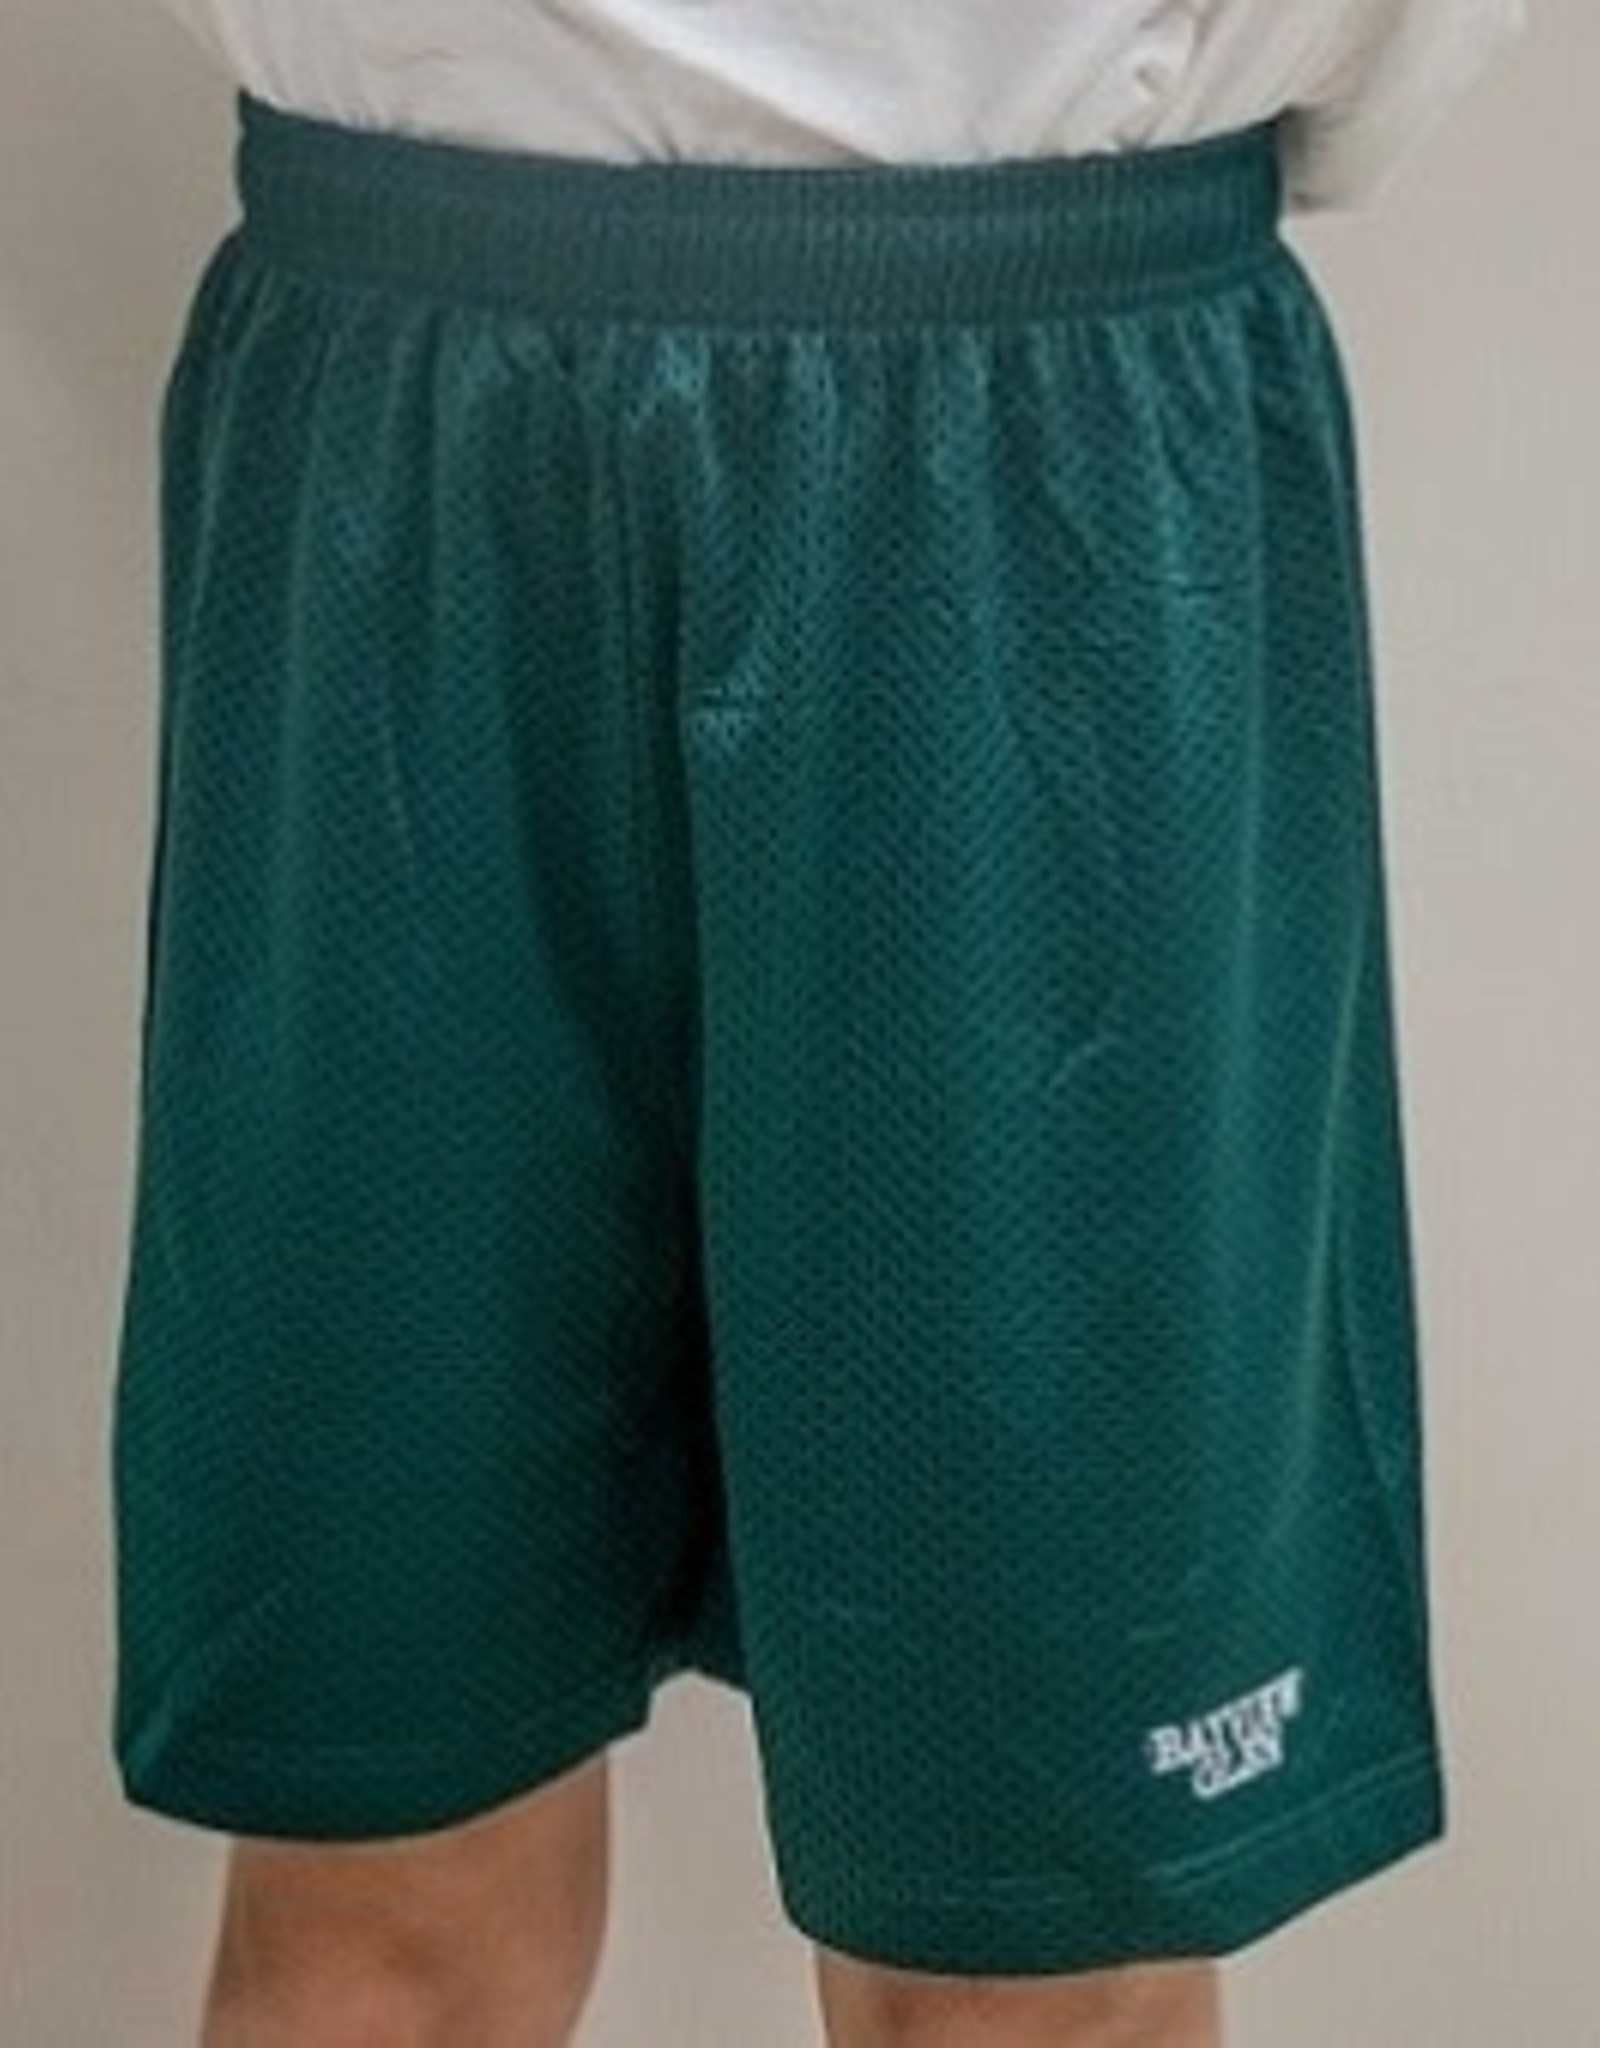 Green Mesh Shorts - Adult - The PA Shop@Bayview Glen